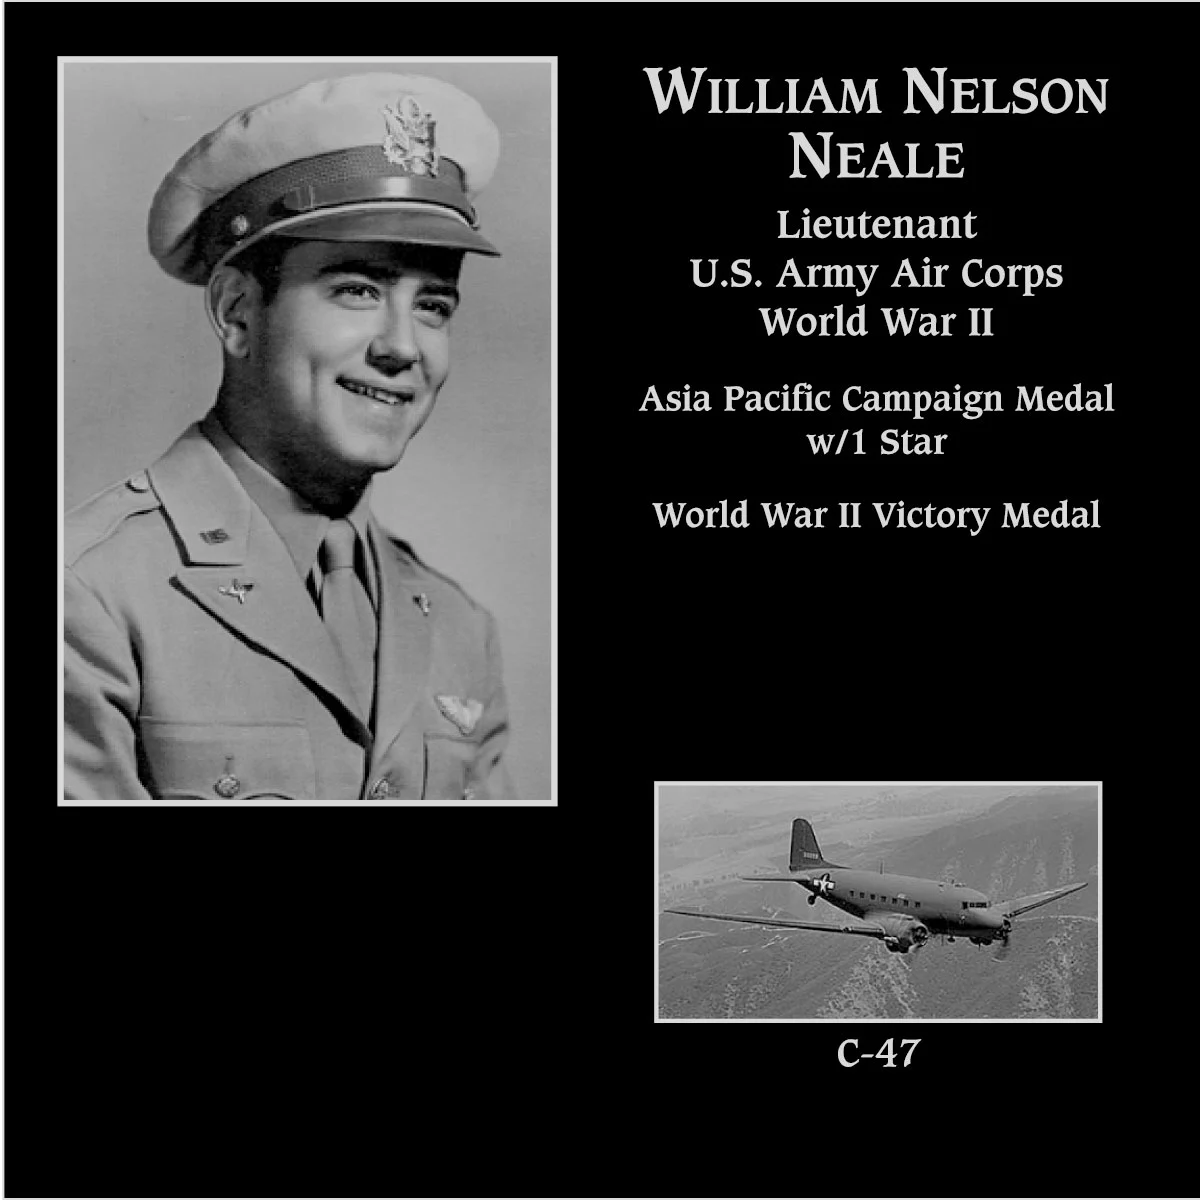 William Nelson Neale